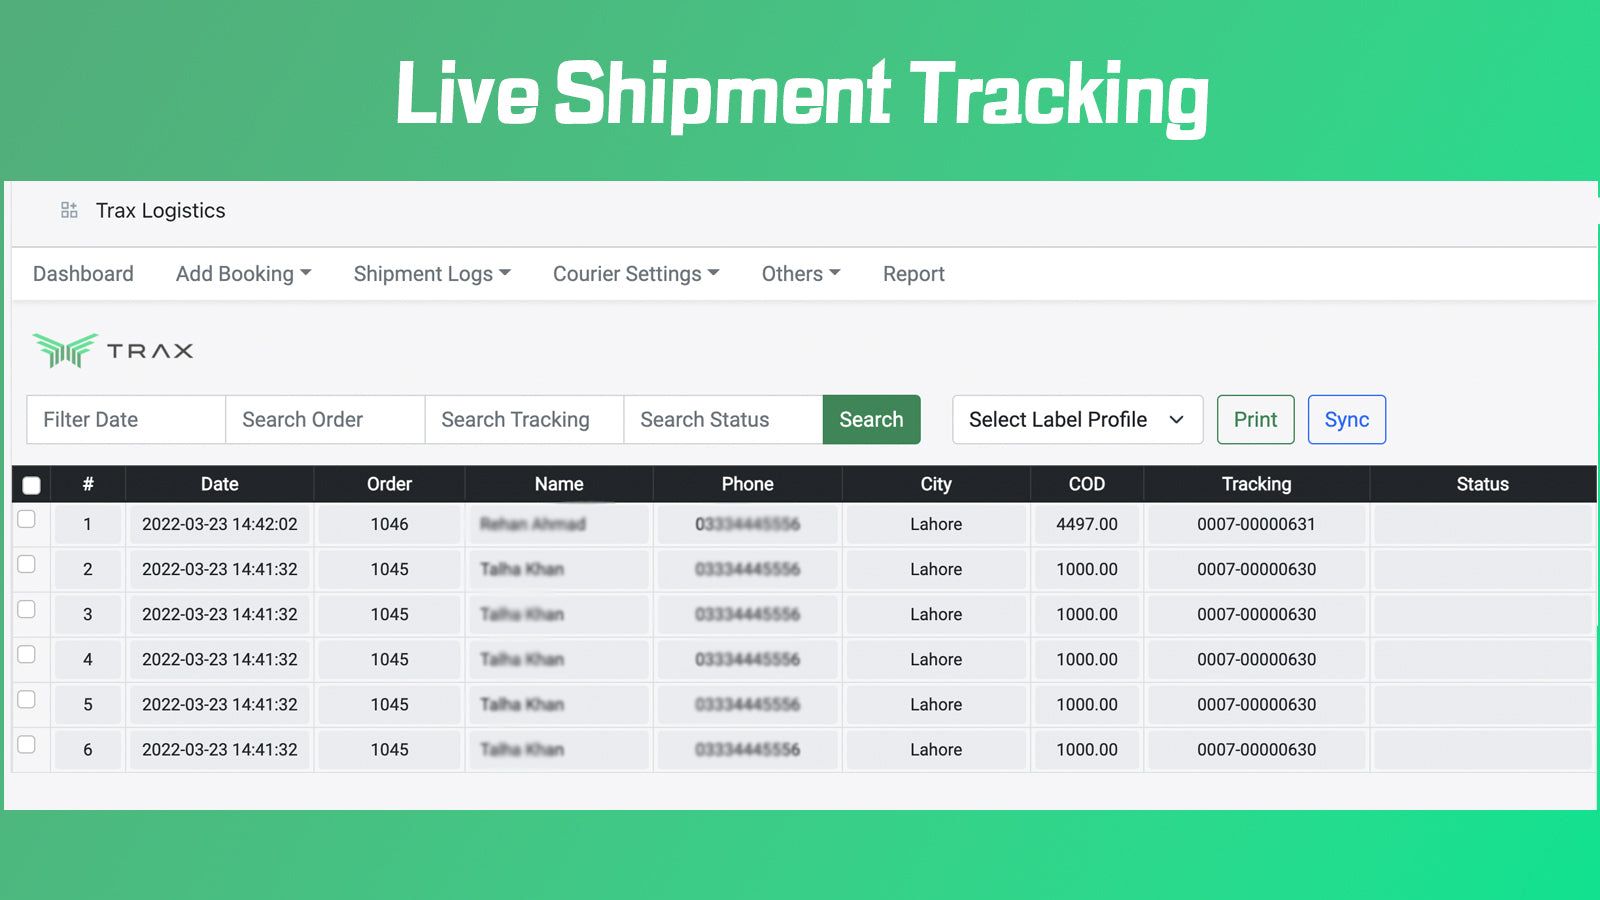 Live Shipment Tracking